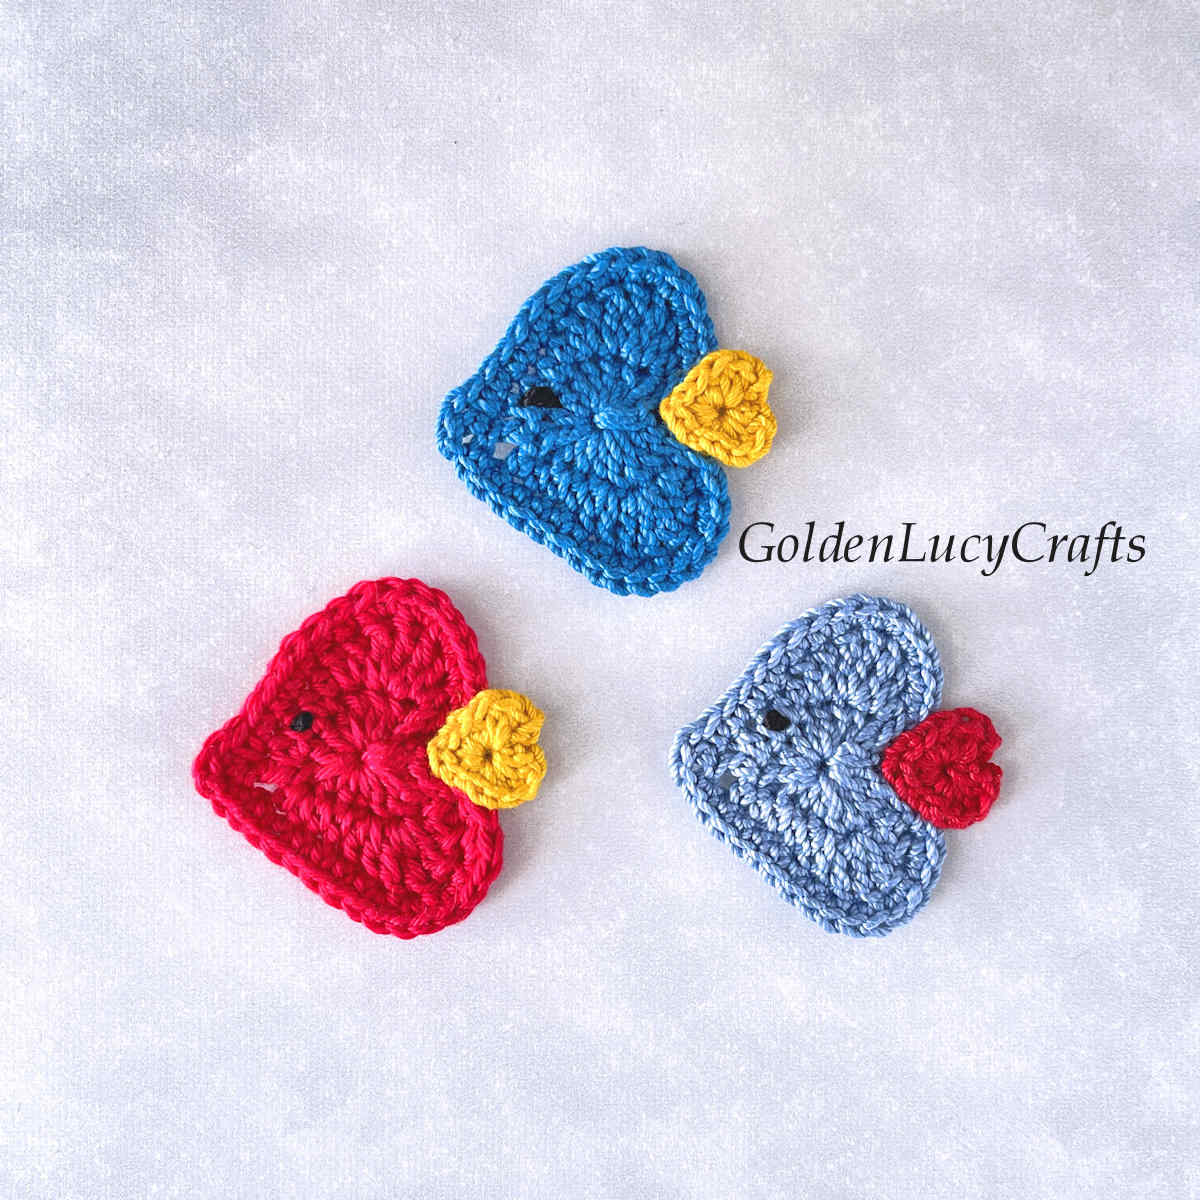 Three crochet heart-shaped fish appliques.